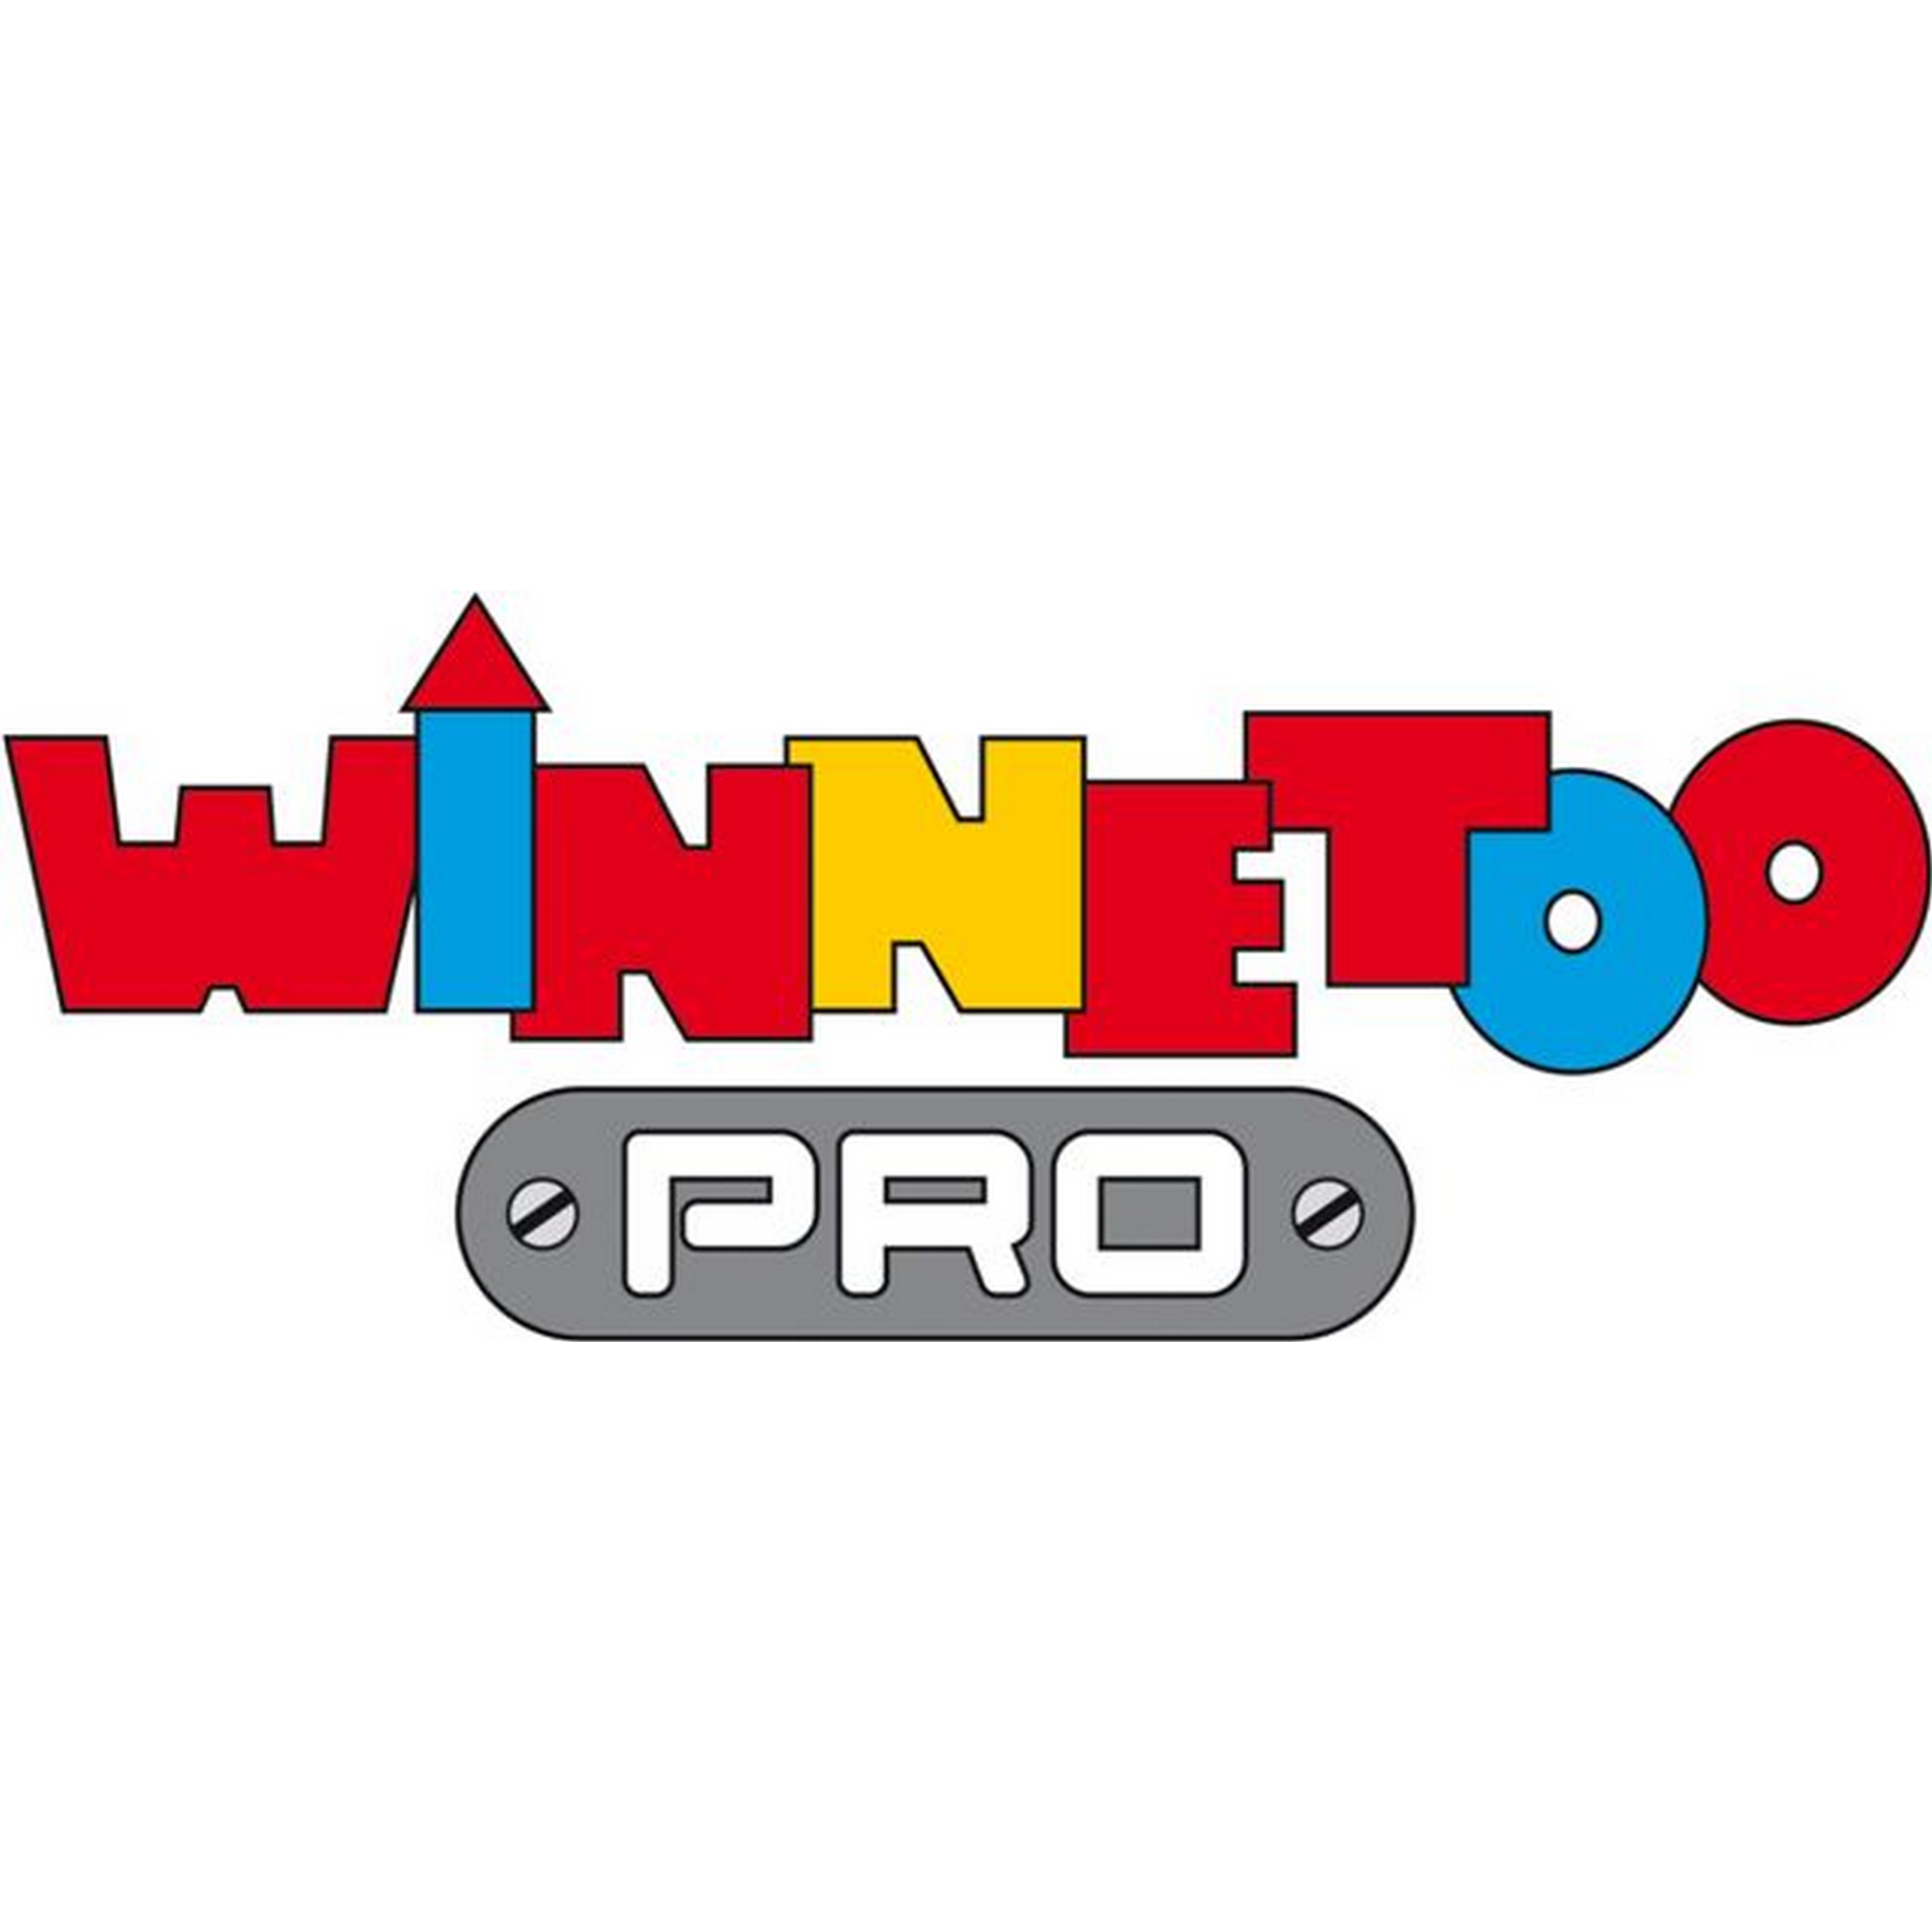 Klettersteg 'Winnetoo Pro' Nadelholz 209 x 71 x 4 cm, ohne Zubehör + product picture